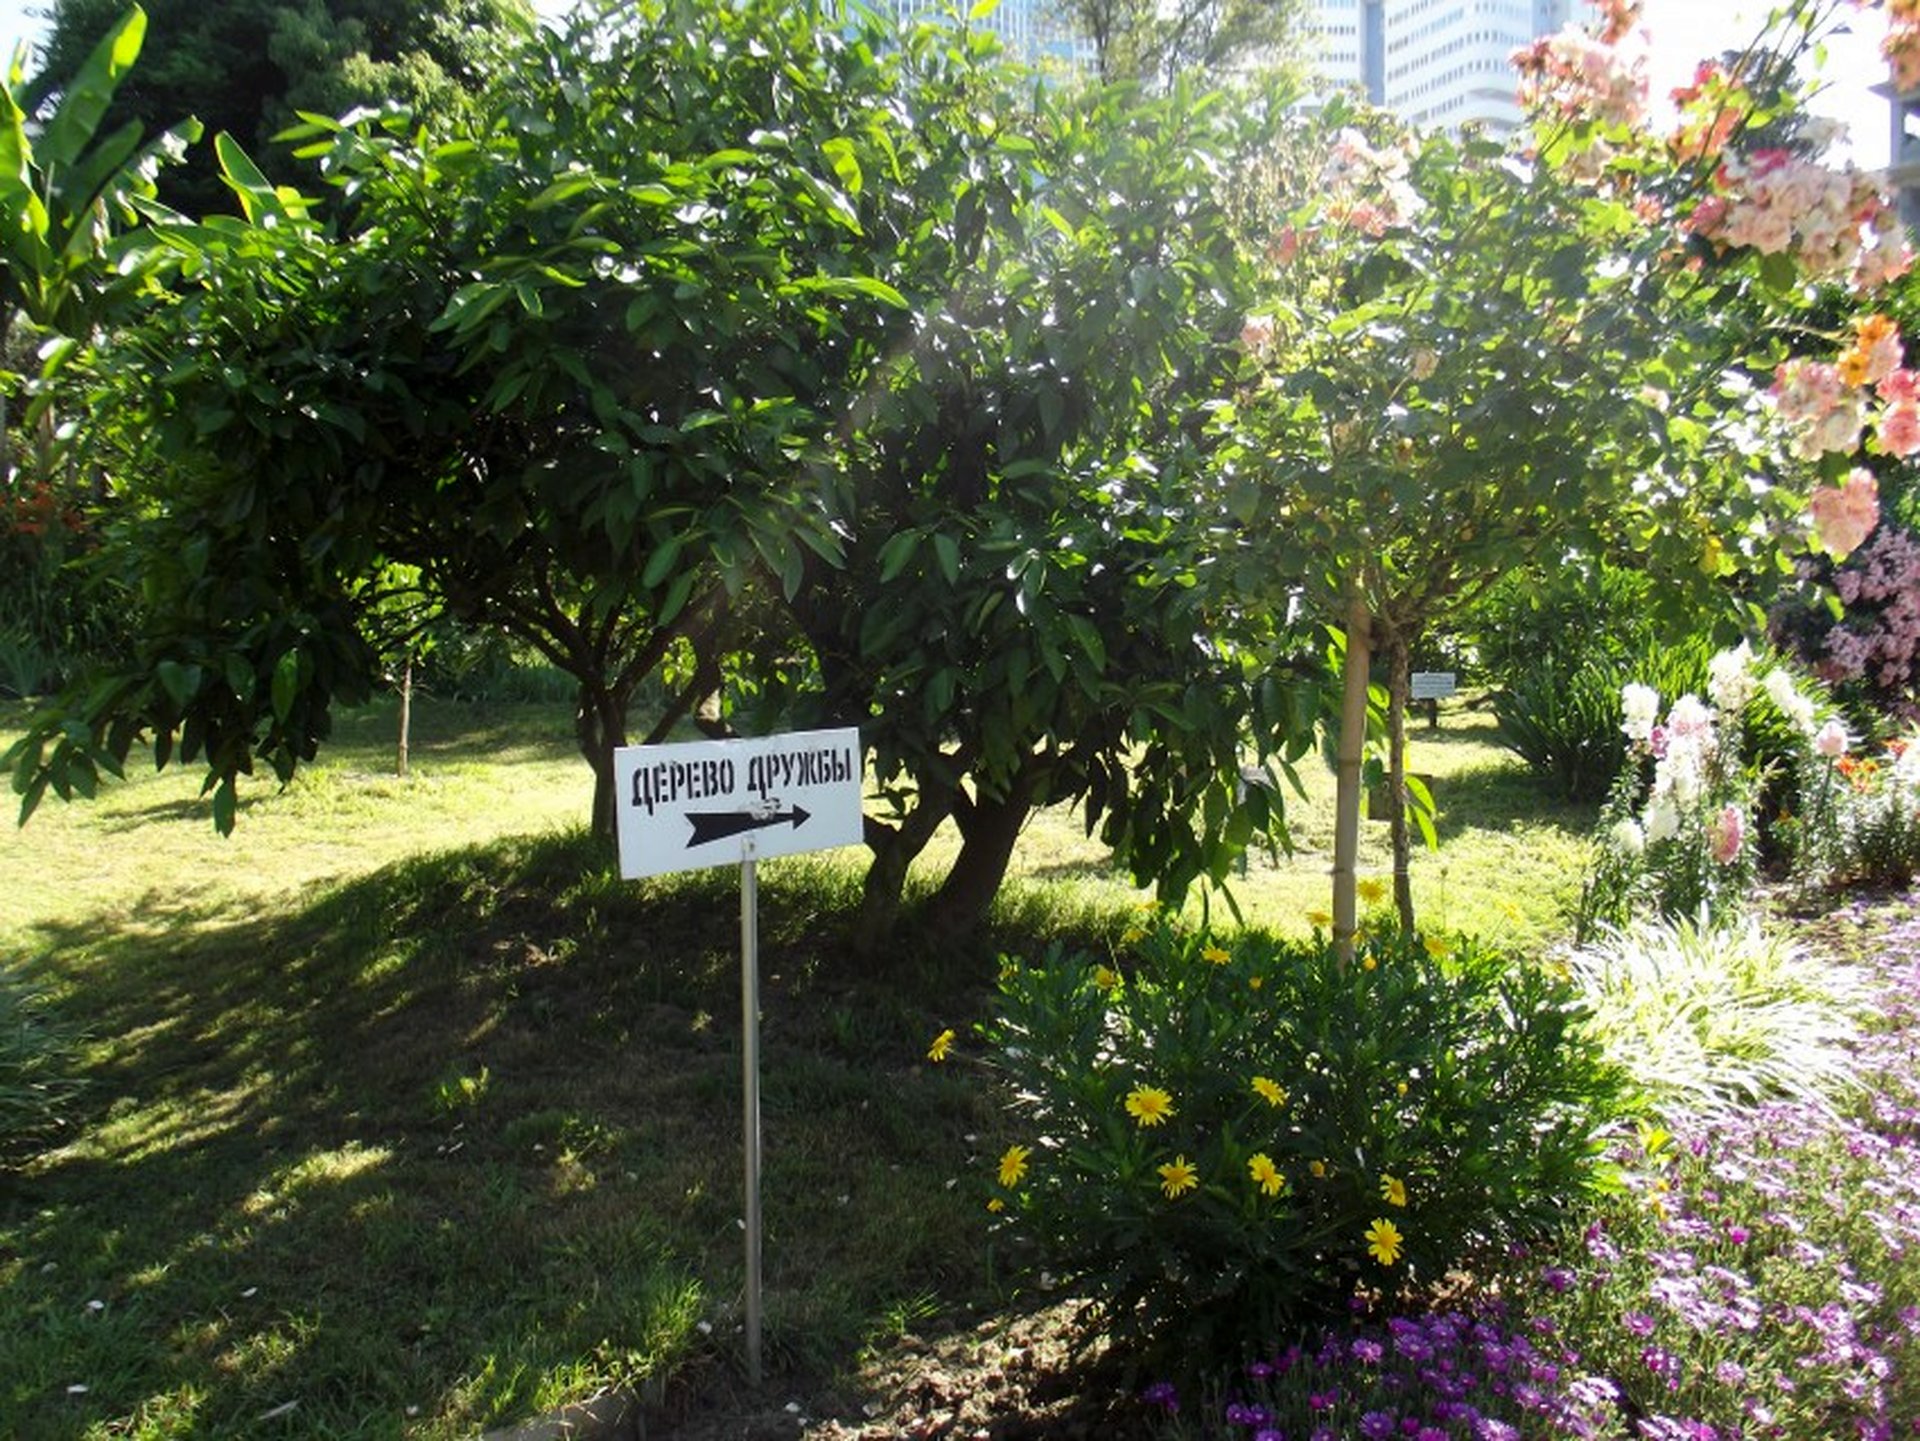 Сочи сад музей дерево дружбы